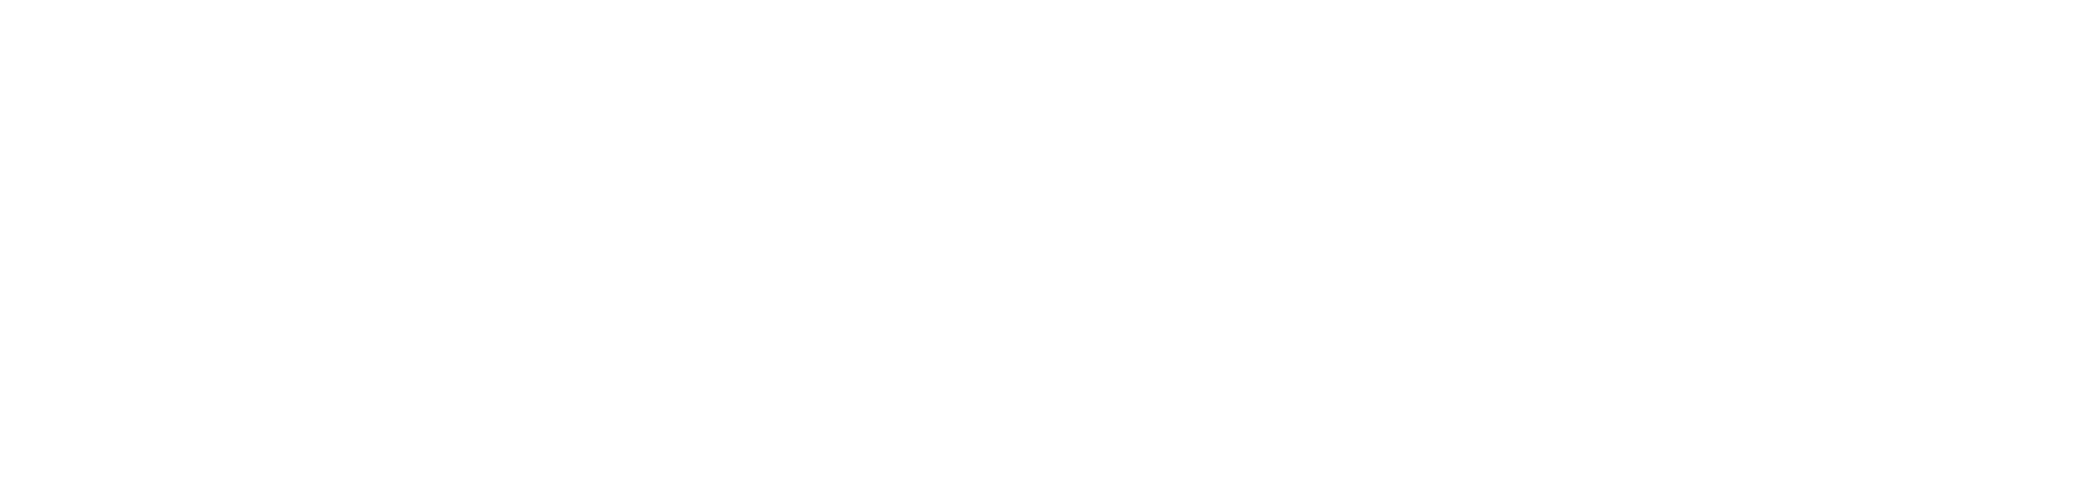 WhatsApp e Messenger per team